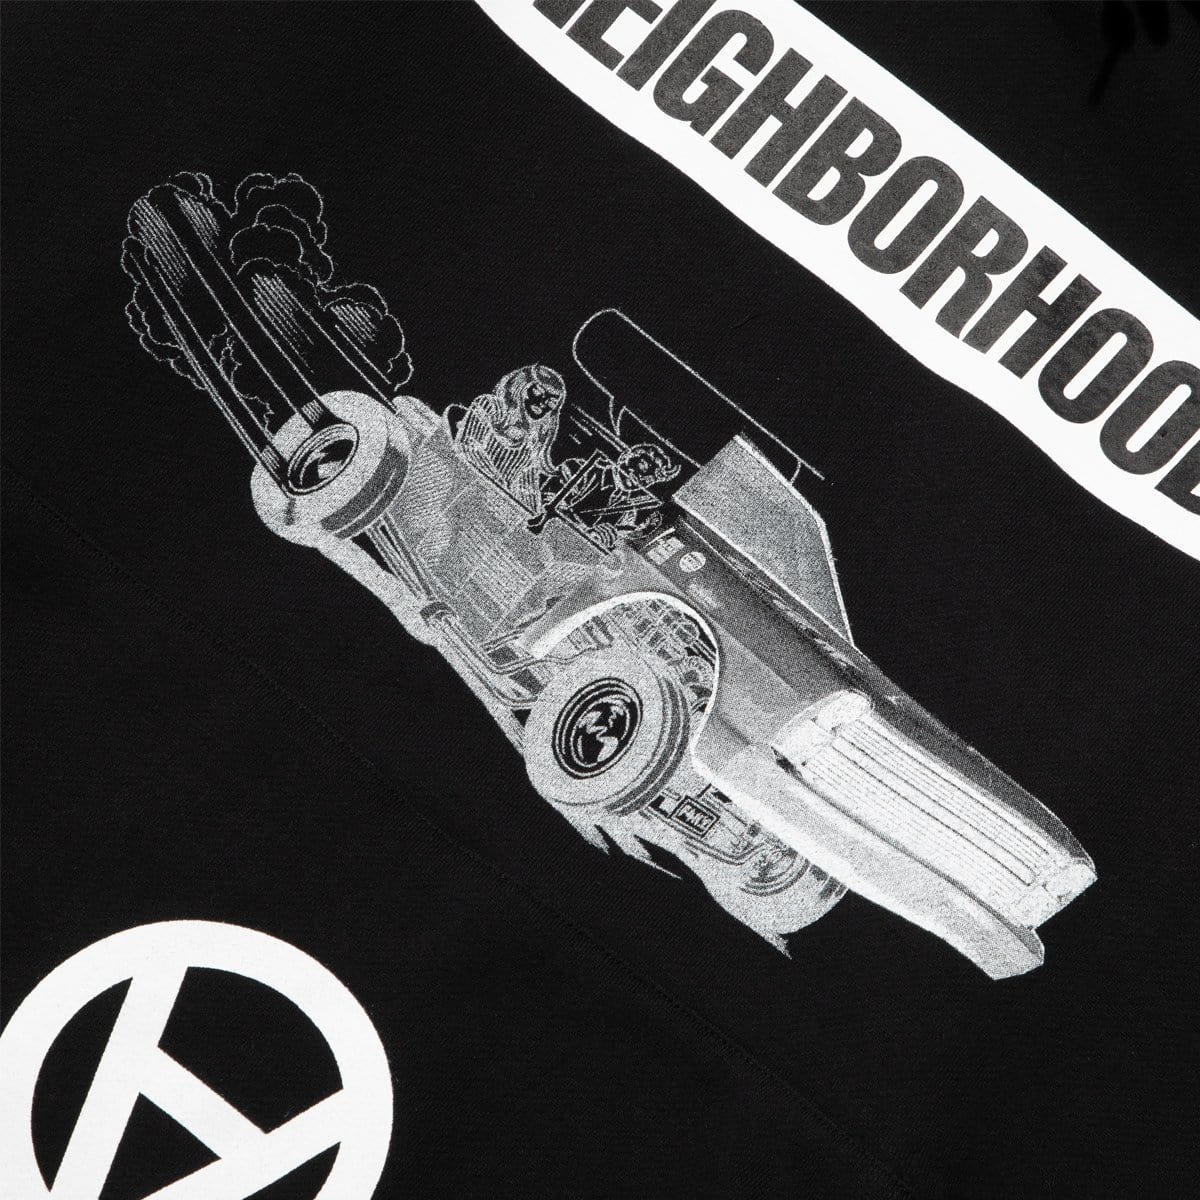 Neighborhood Hoodies & Sweatshirts NHKS / C-HOODED . LS